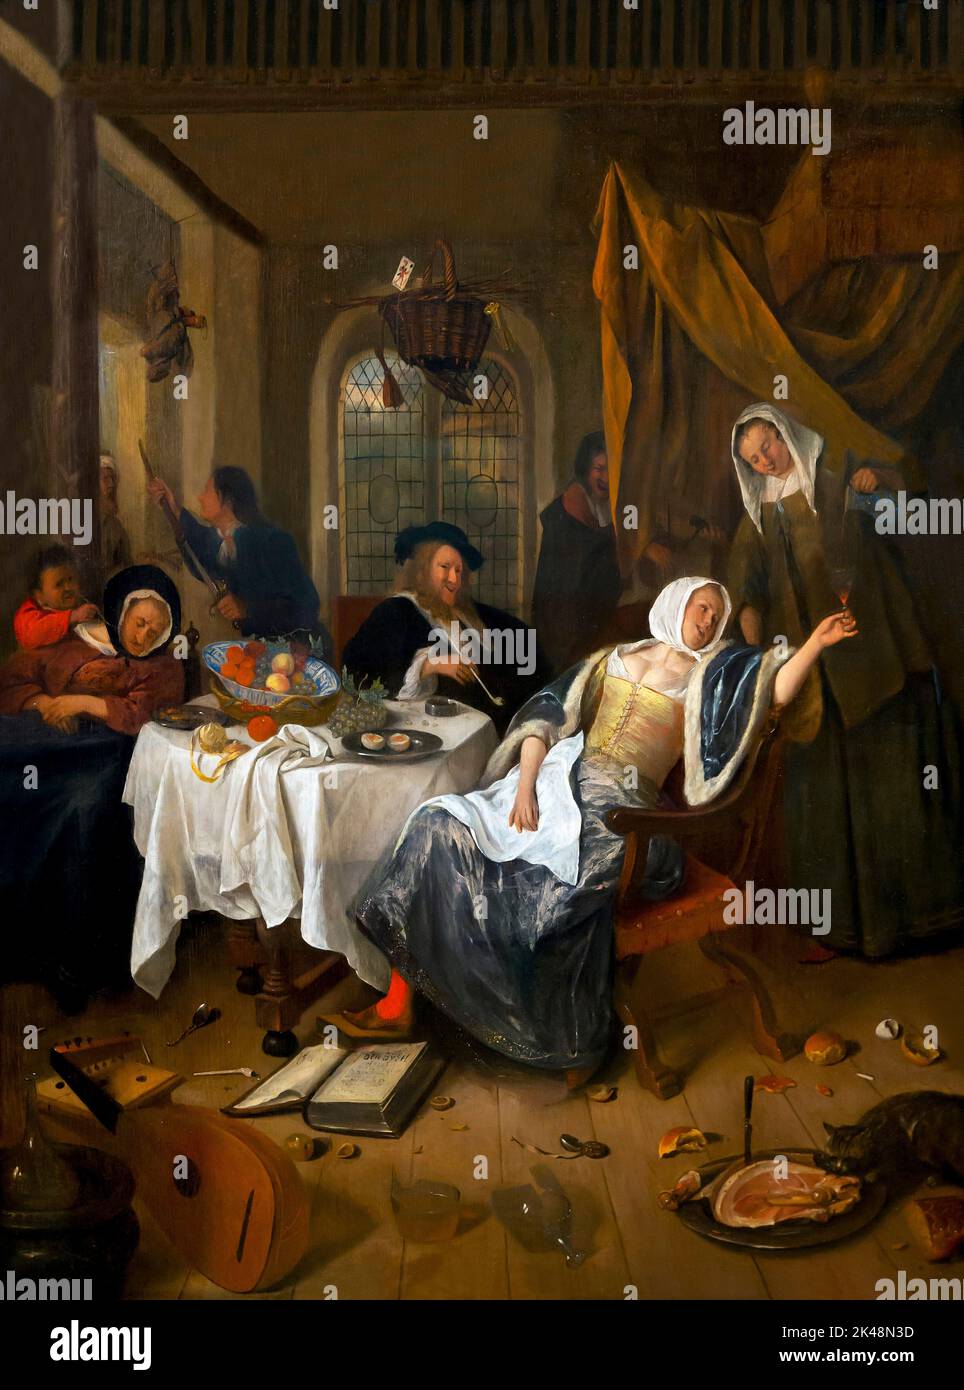 The Dissolute Household, Jan Steen, 1660-1670, Gemaldegalerie, Berlin, Germany, Europe Stock Photo